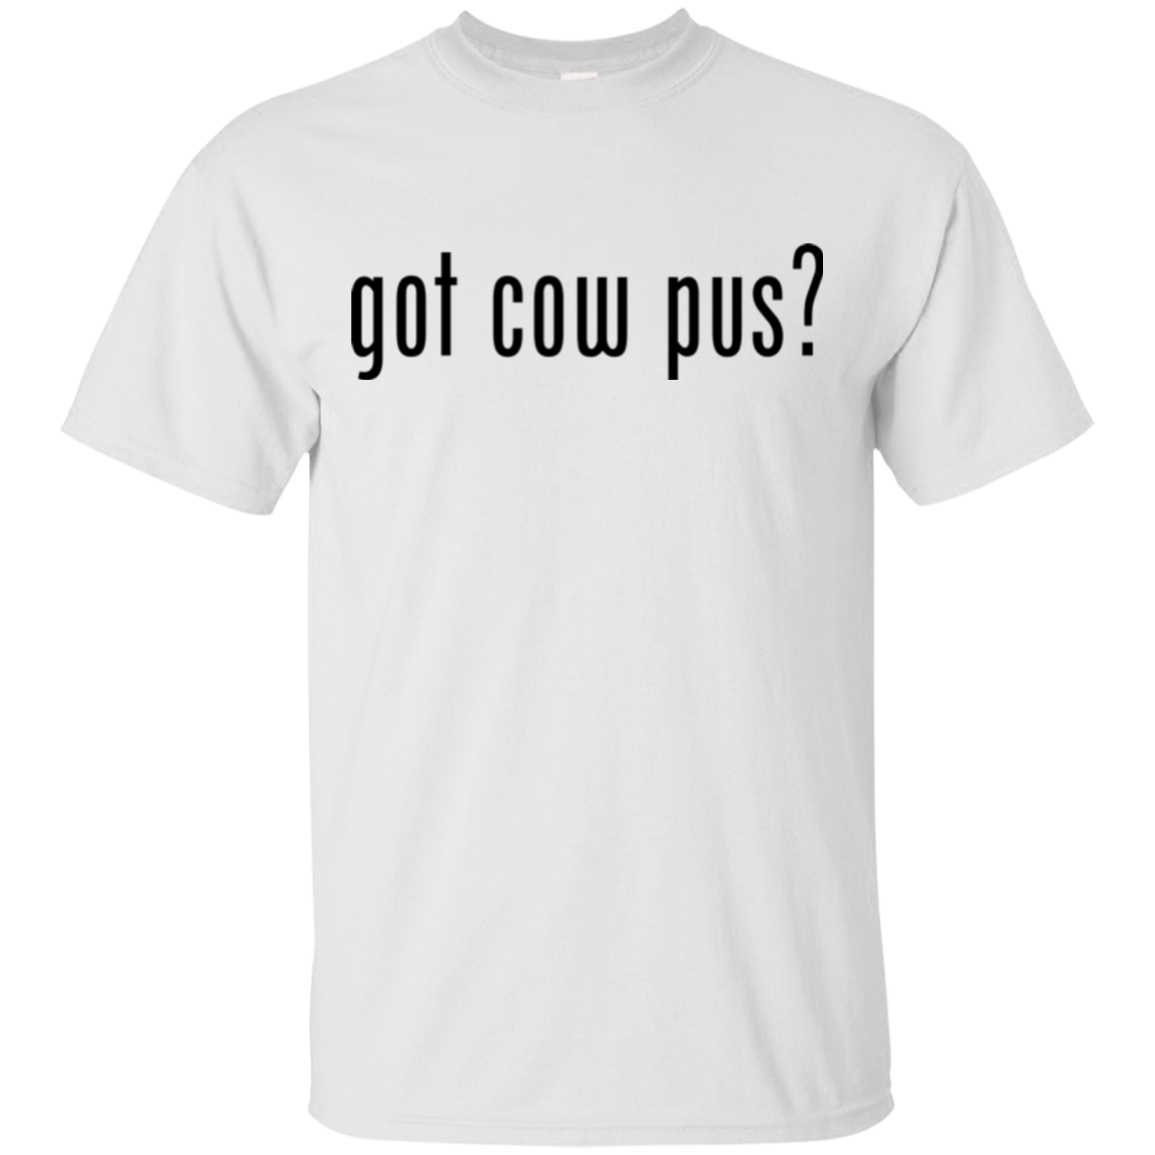 GOT COW PUS? BLK T-SHIRT